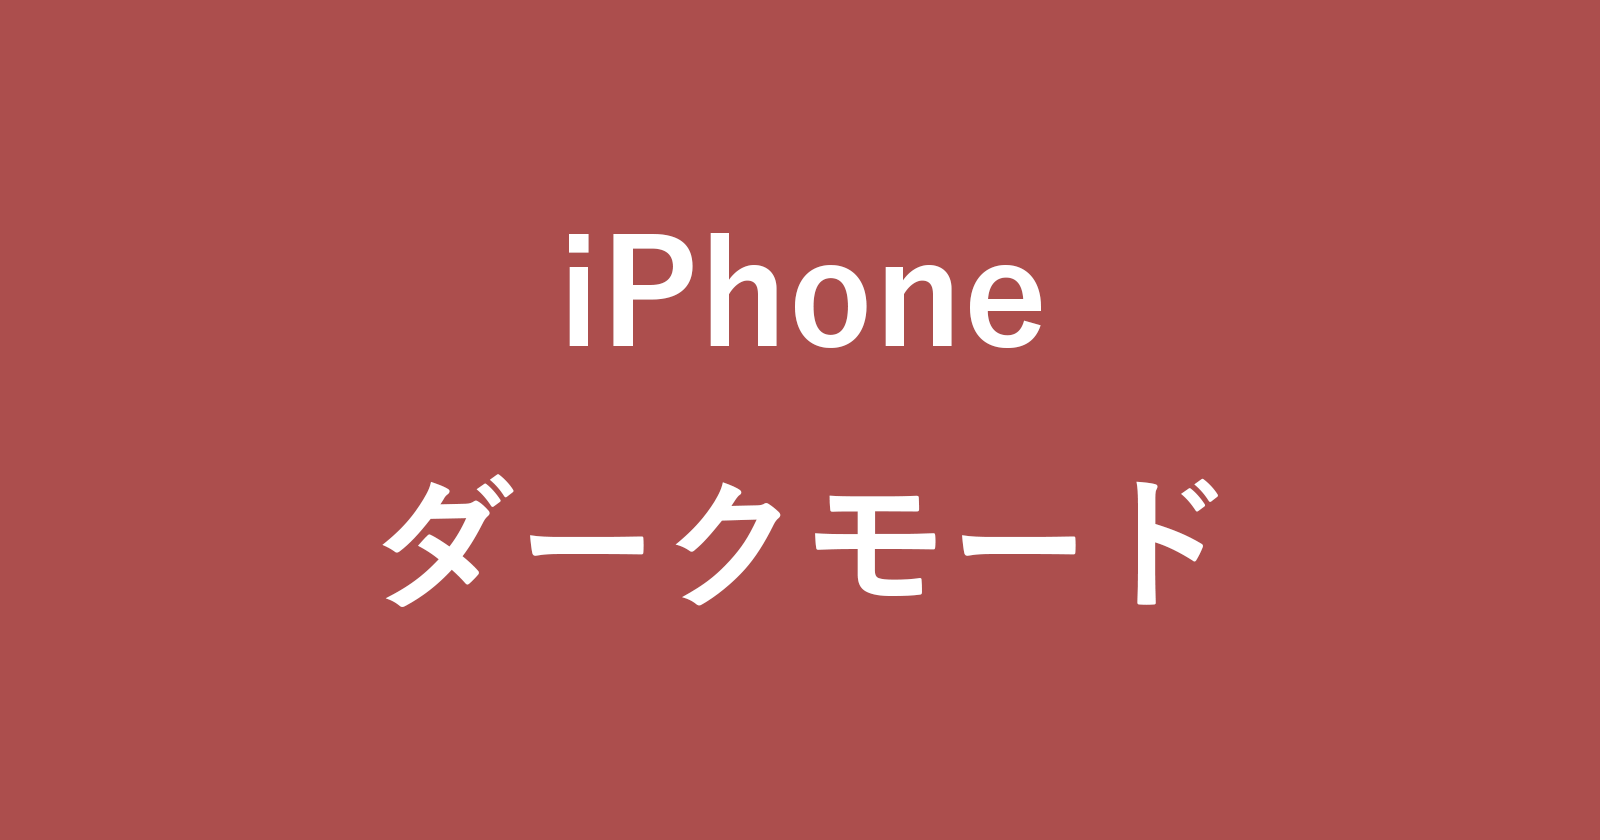 iphone darkmode